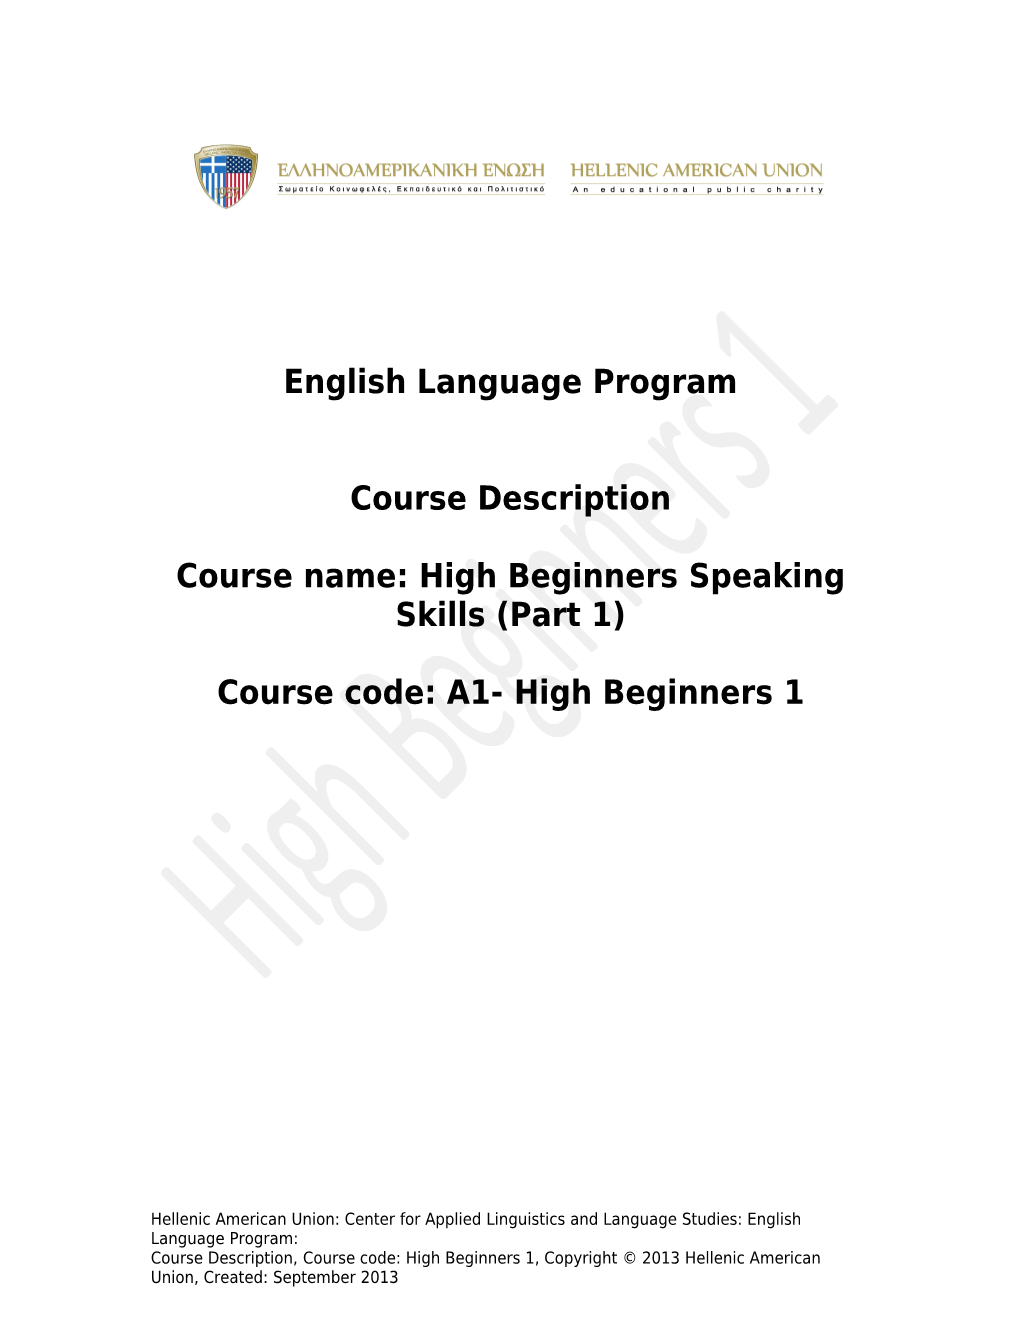 Sample Course Manual